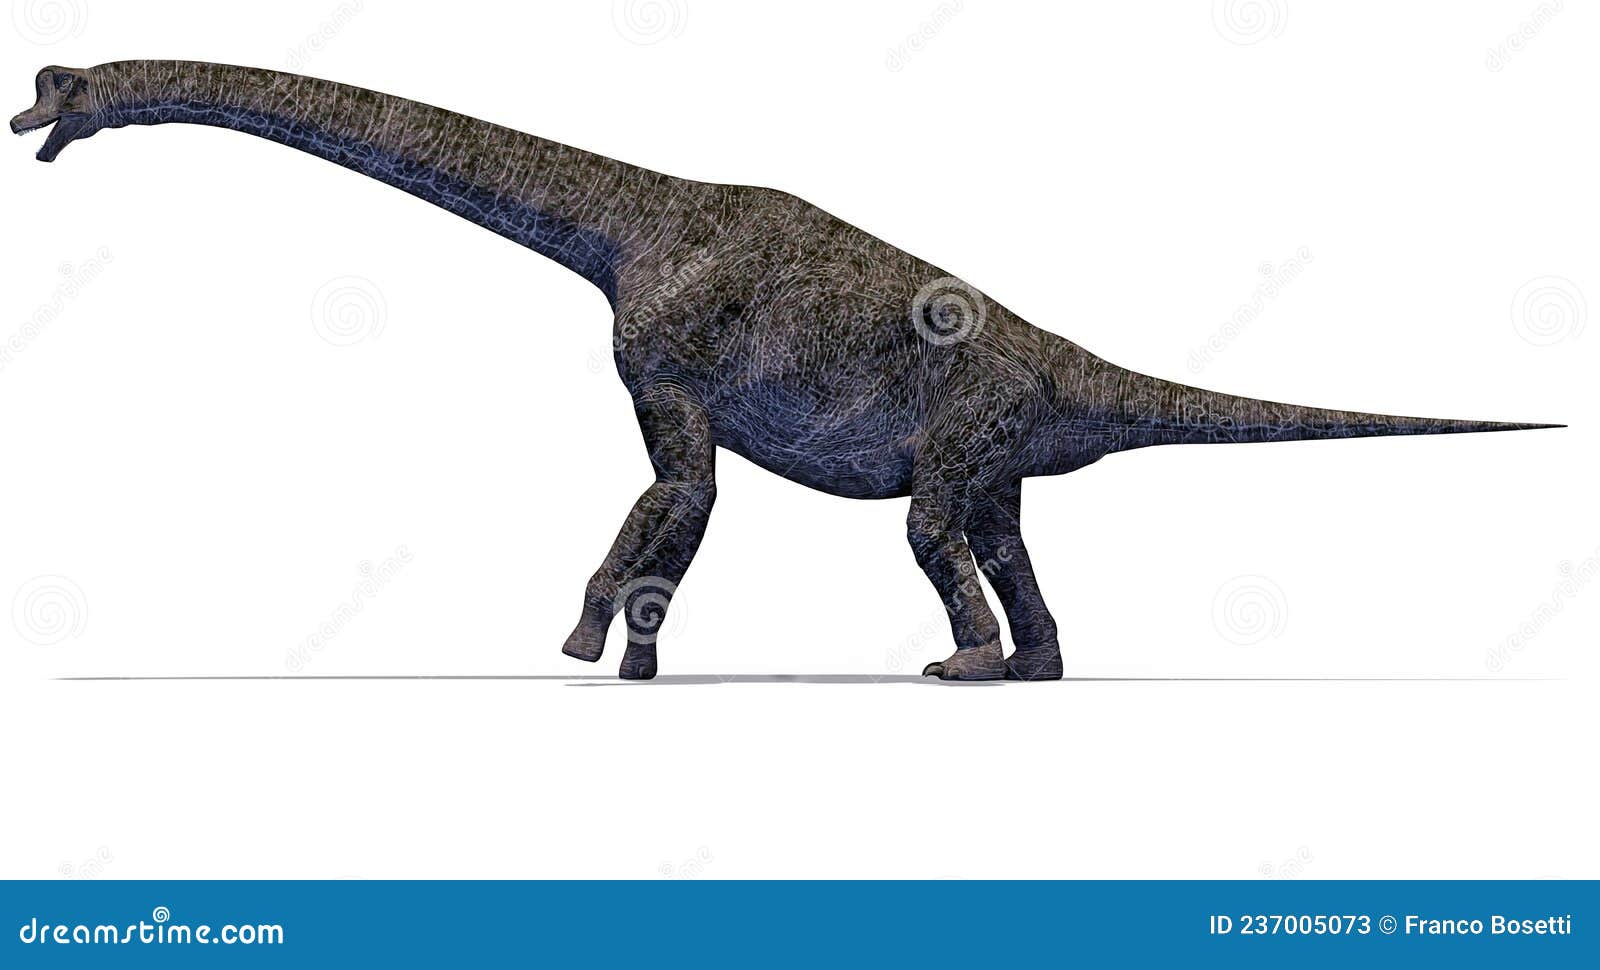 brachiosaurus herbivorous dinosaur side